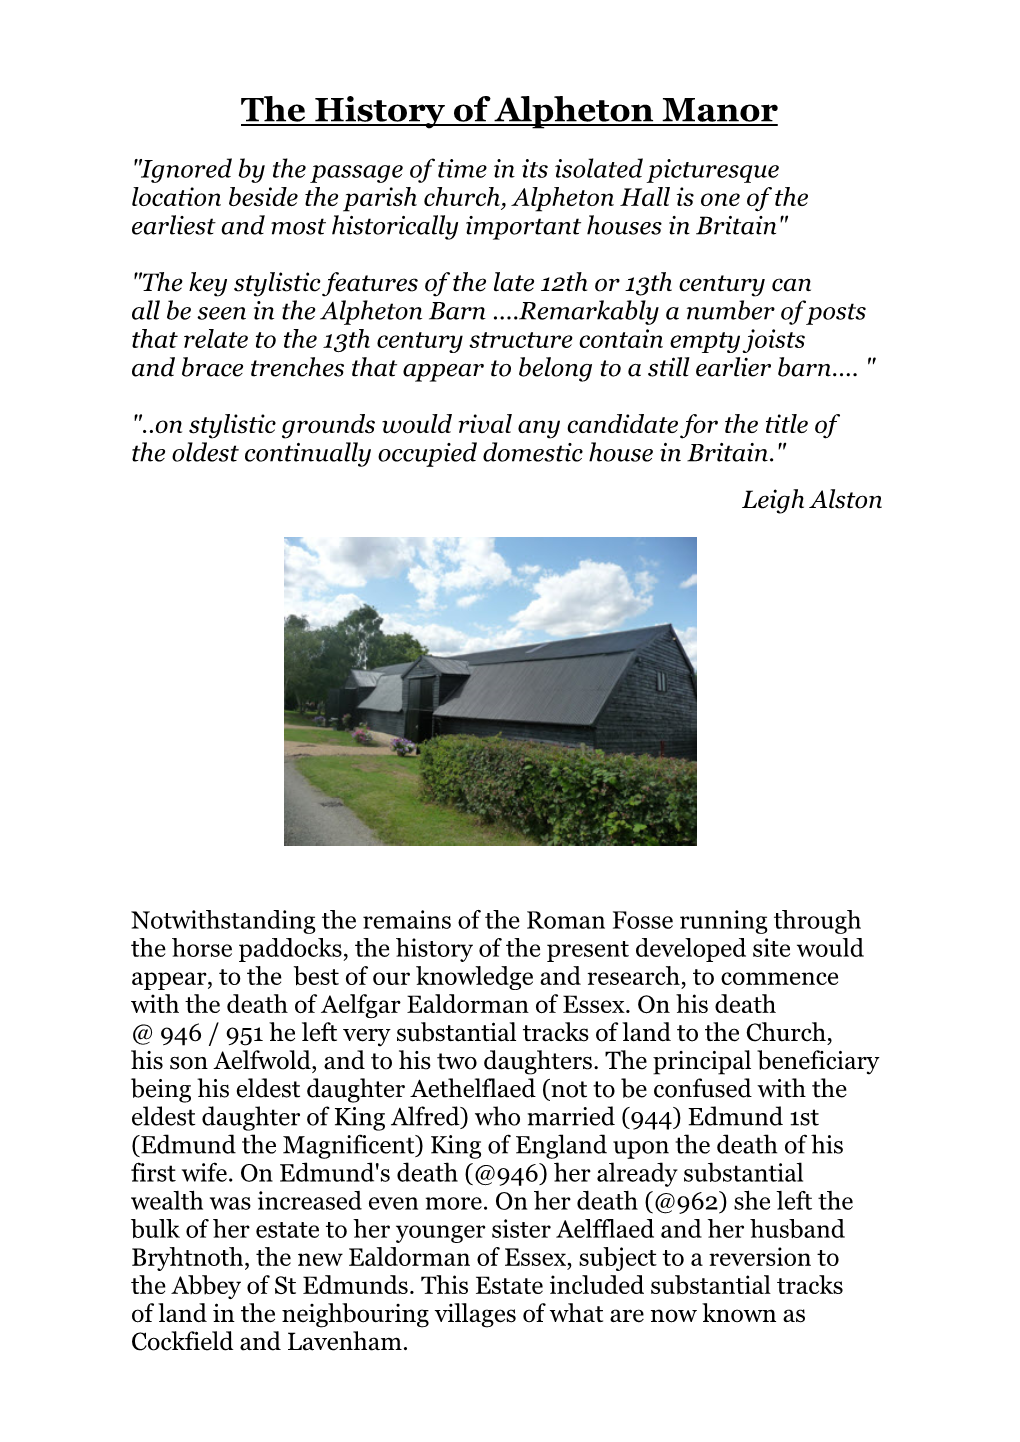 The History of Alpheton Manor Leaflet